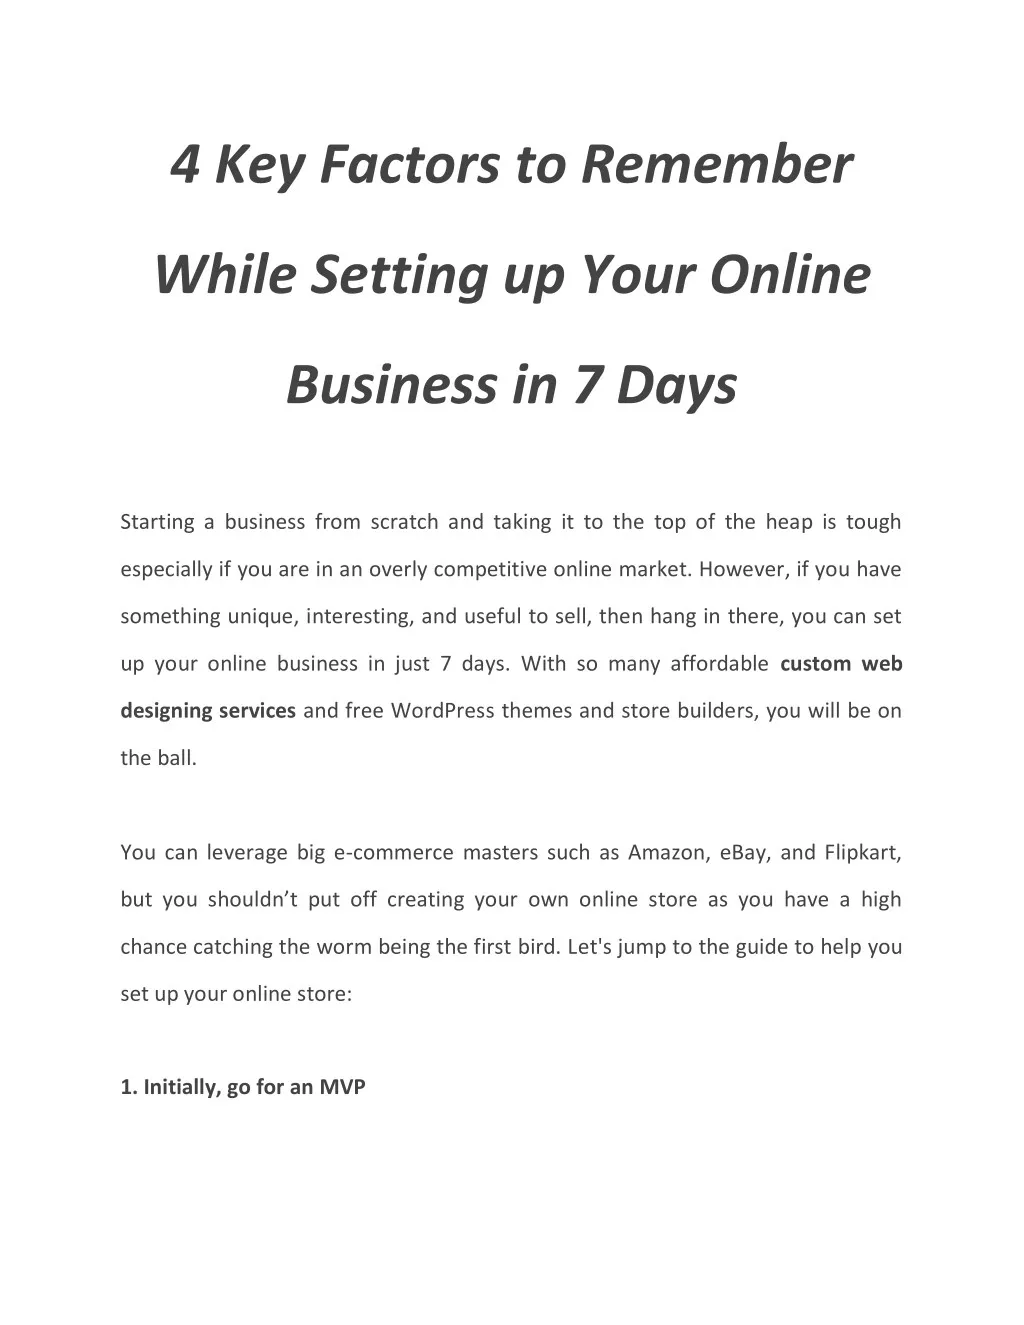 4 key factors to remember